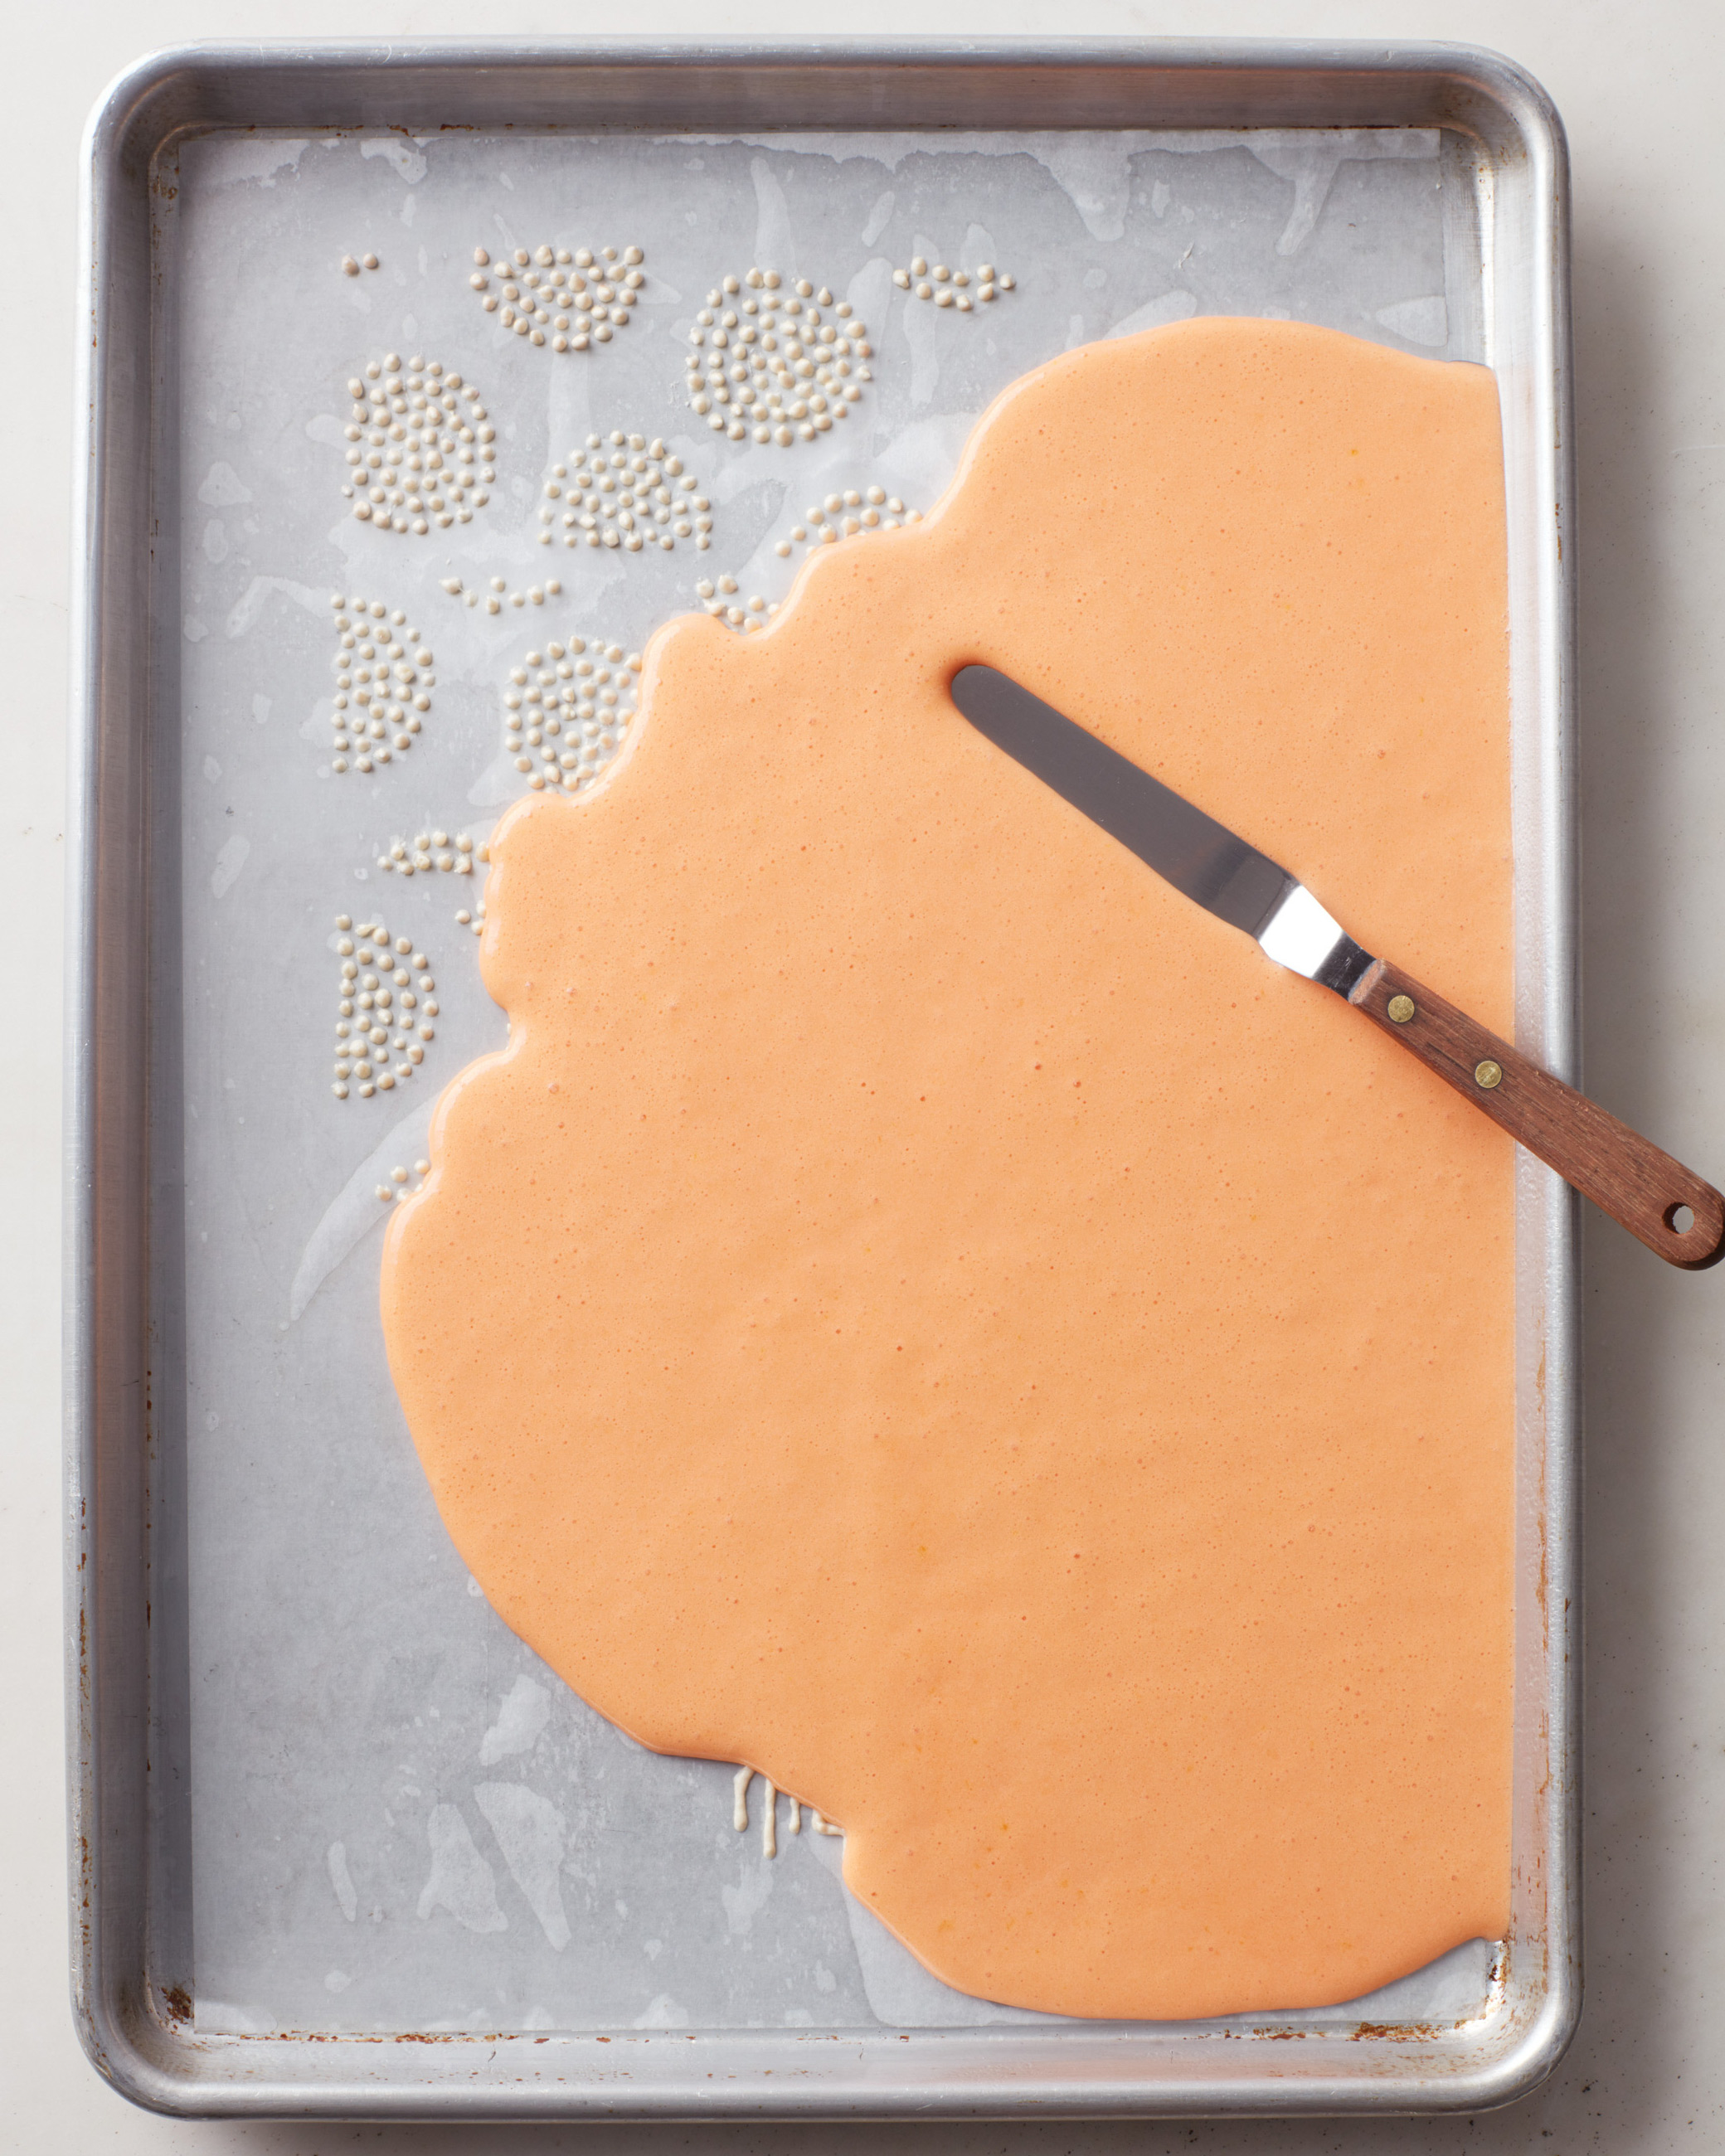 Japanese Sponge Cakes Recipe | Martha Stewart Weddings